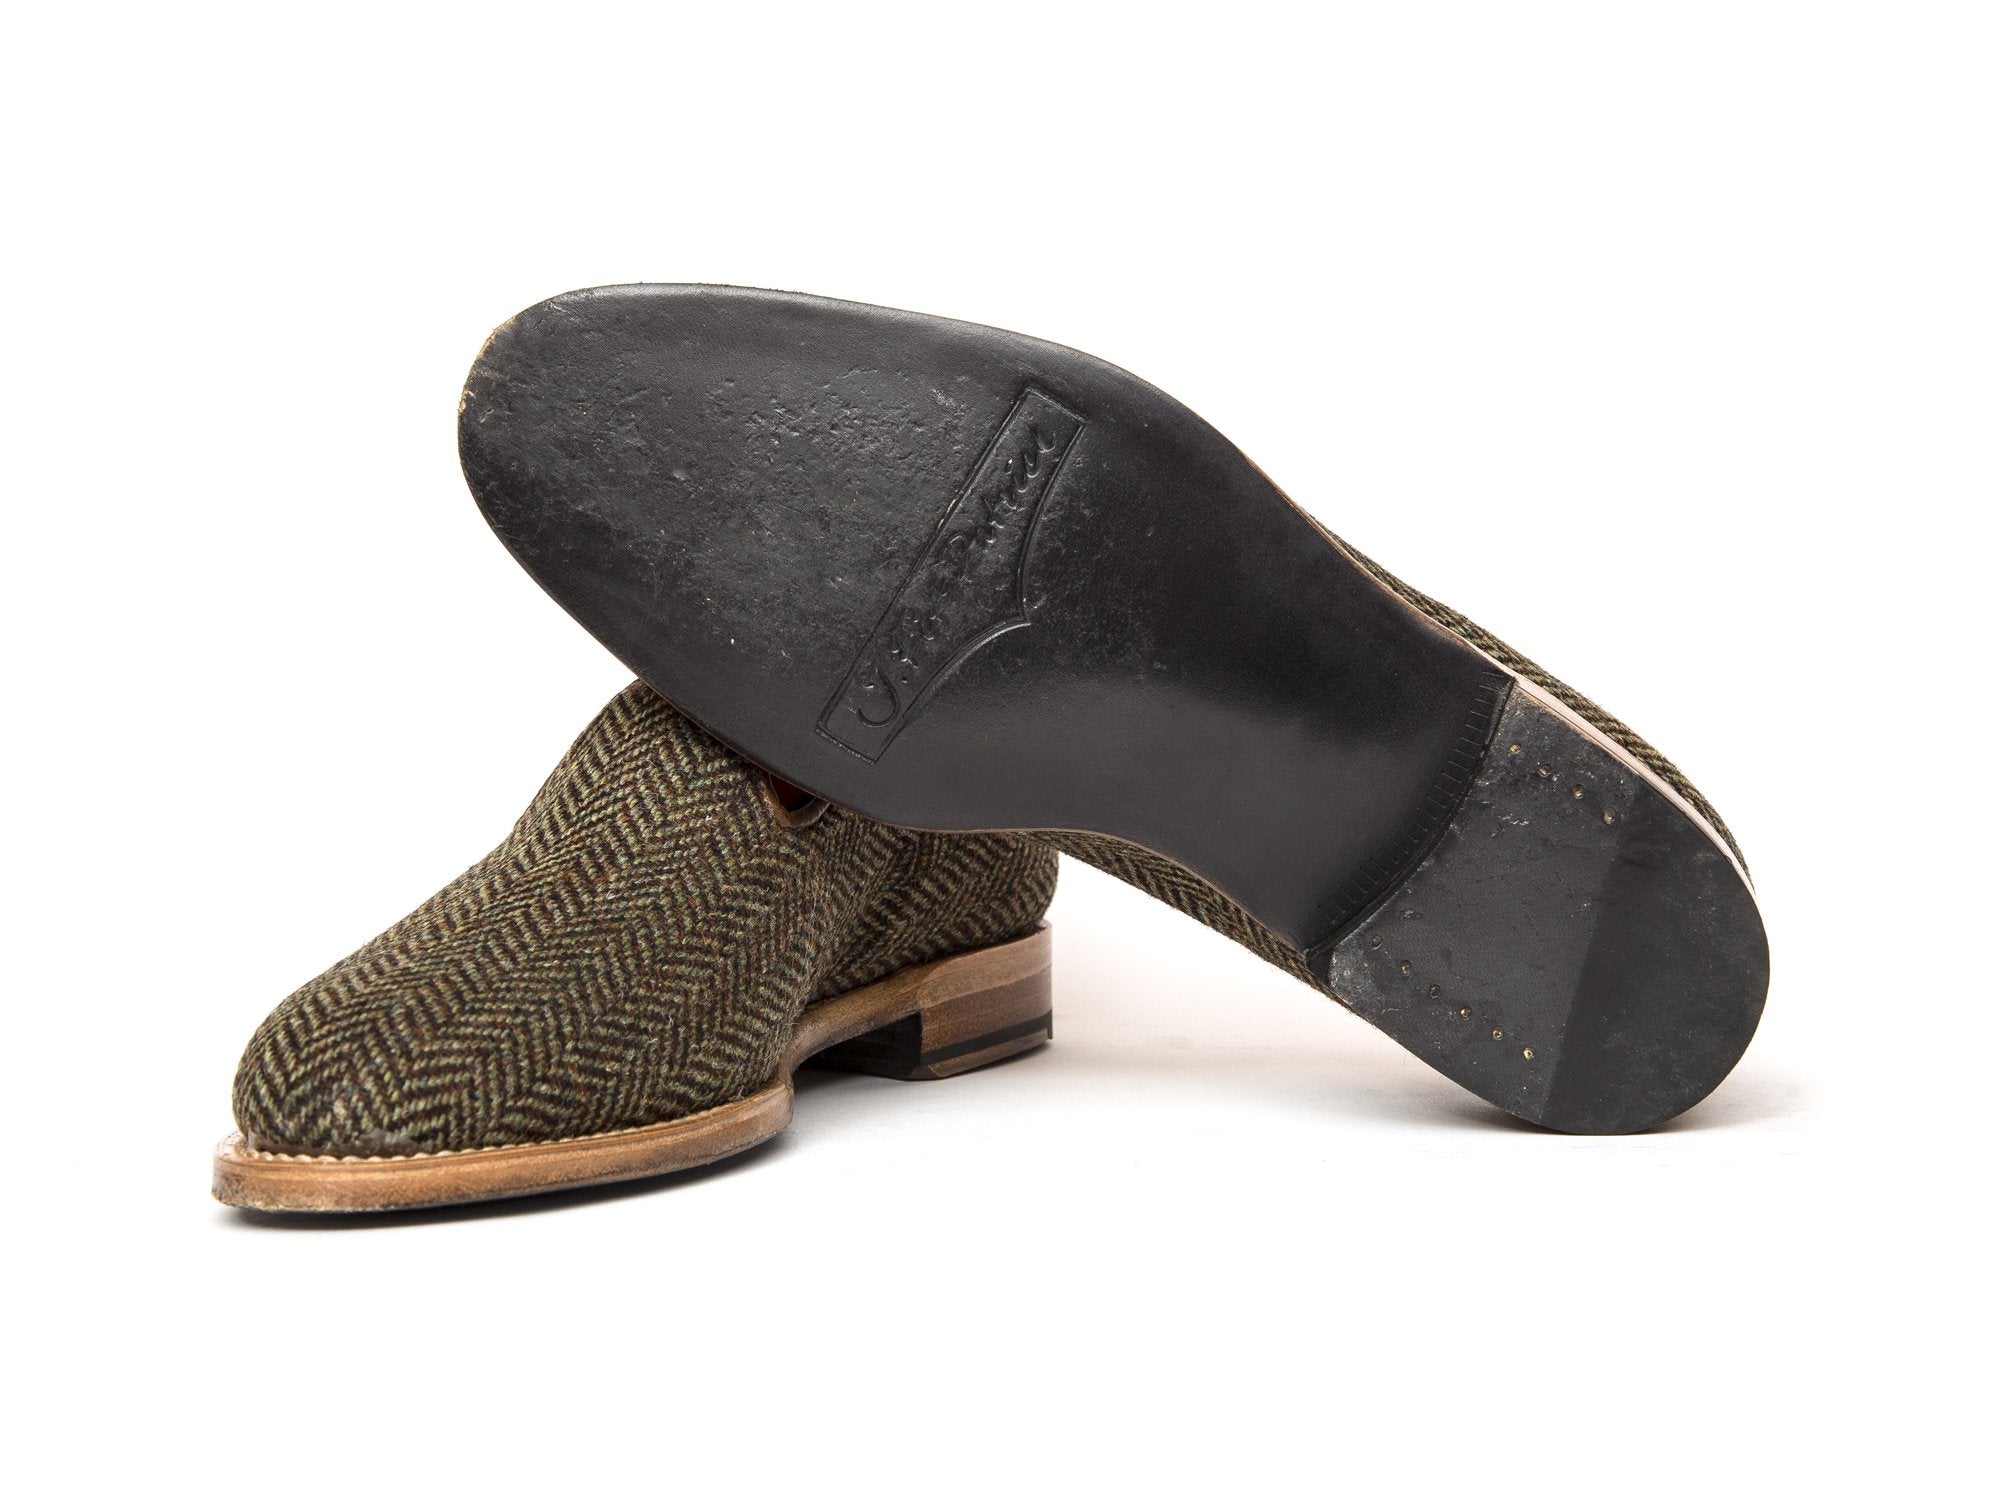 J.FitzPatrick Footwear - Laurelhurst II - Forest Tweed - TMG Last - Natural Sole